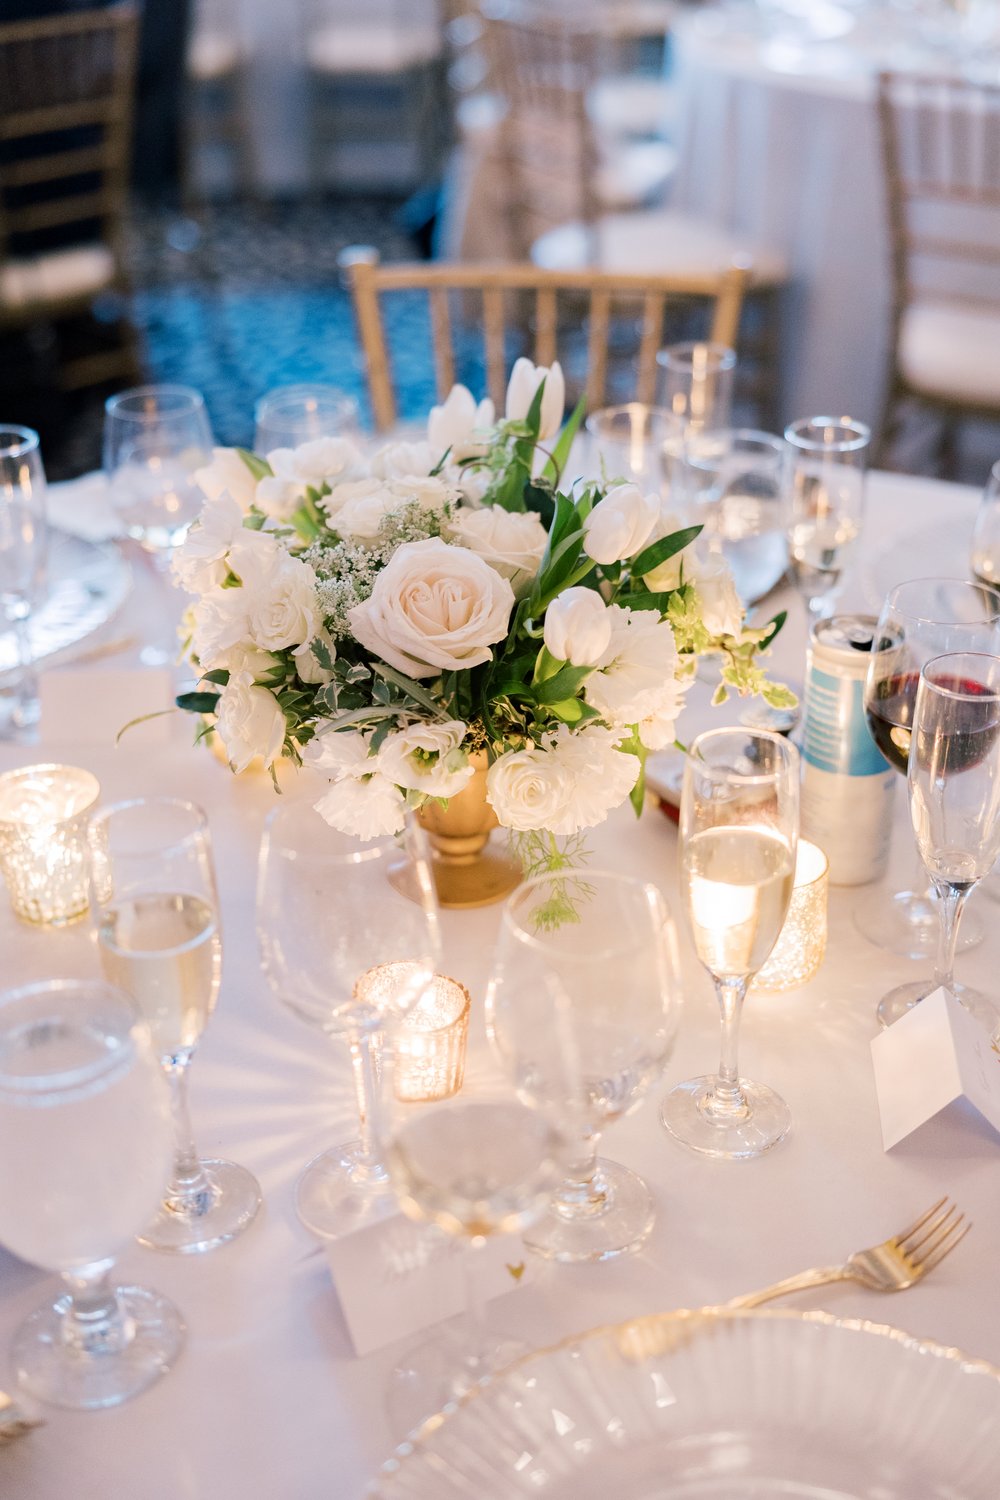 Kolettis Wedding Bridgewater Club elegant white floral centerpiece reception decor.jpg